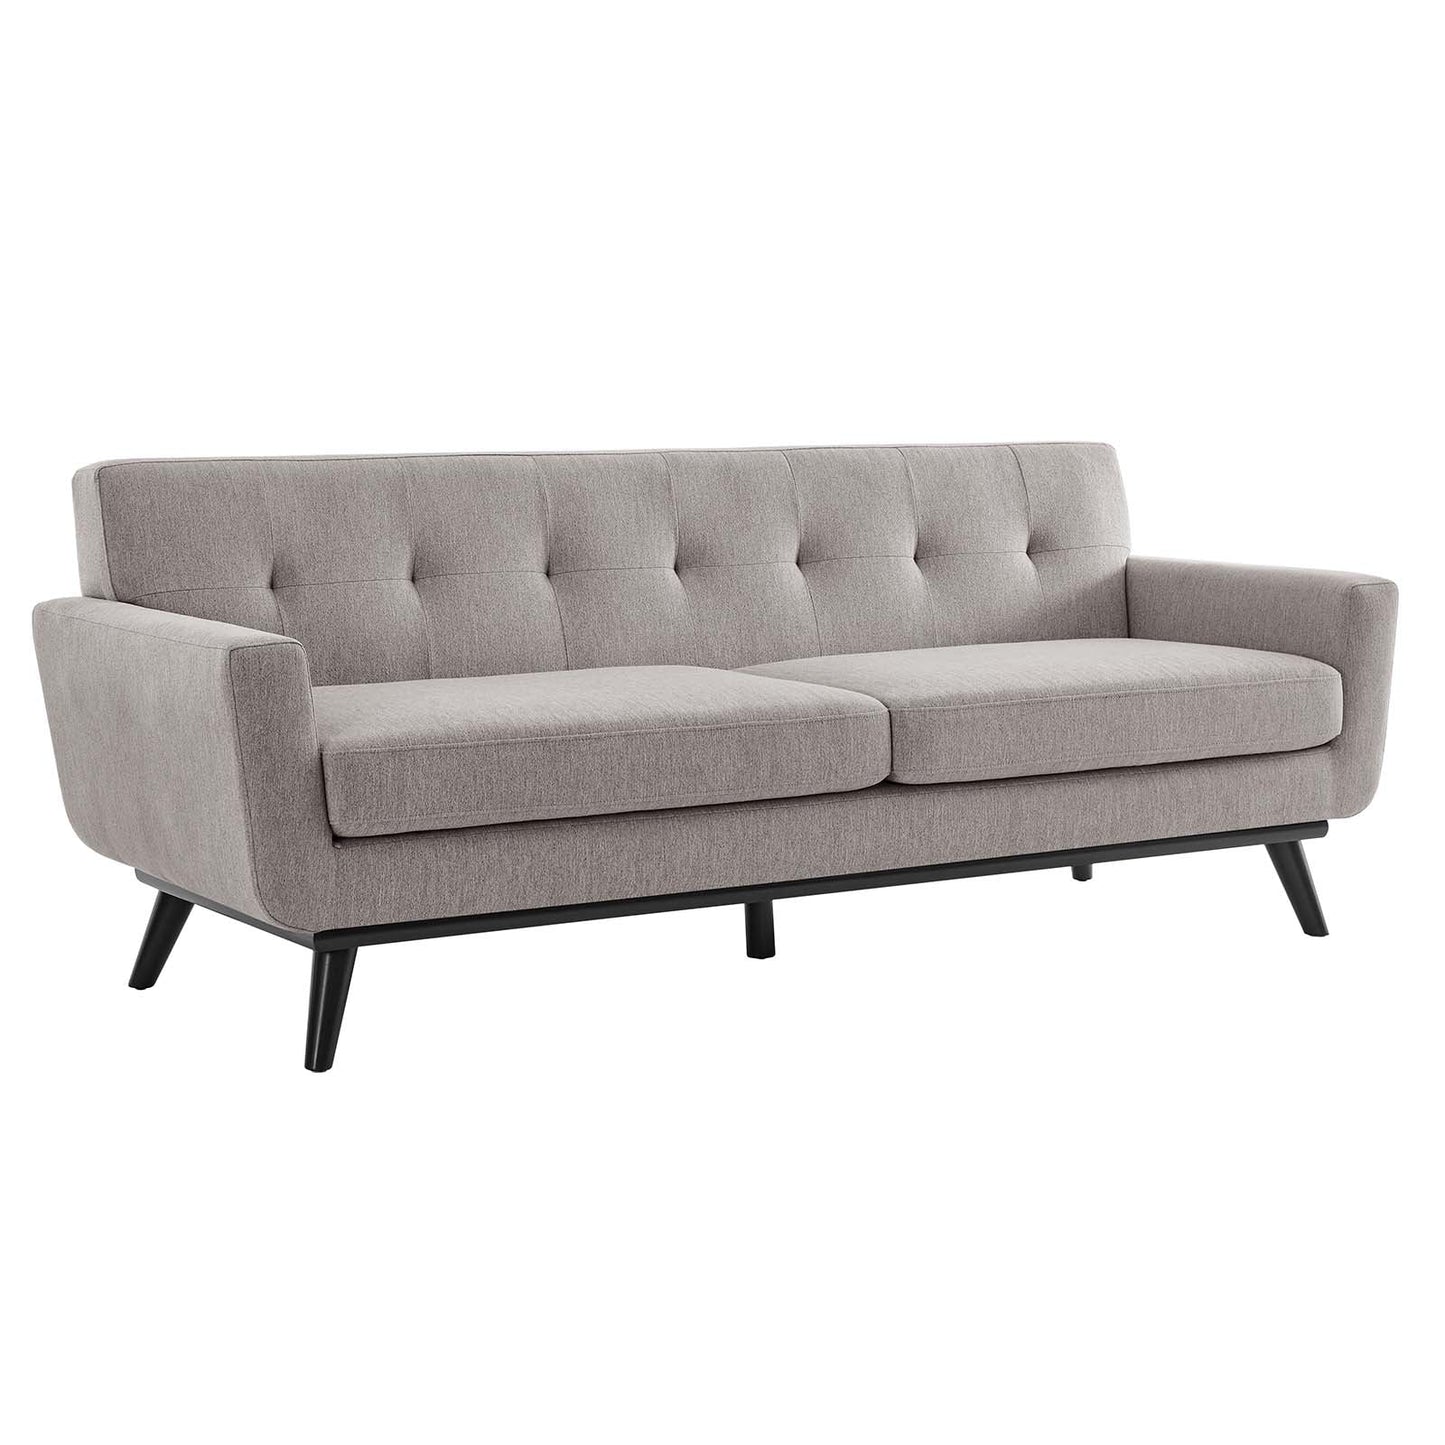 Engage Herringbone Fabric Sofa